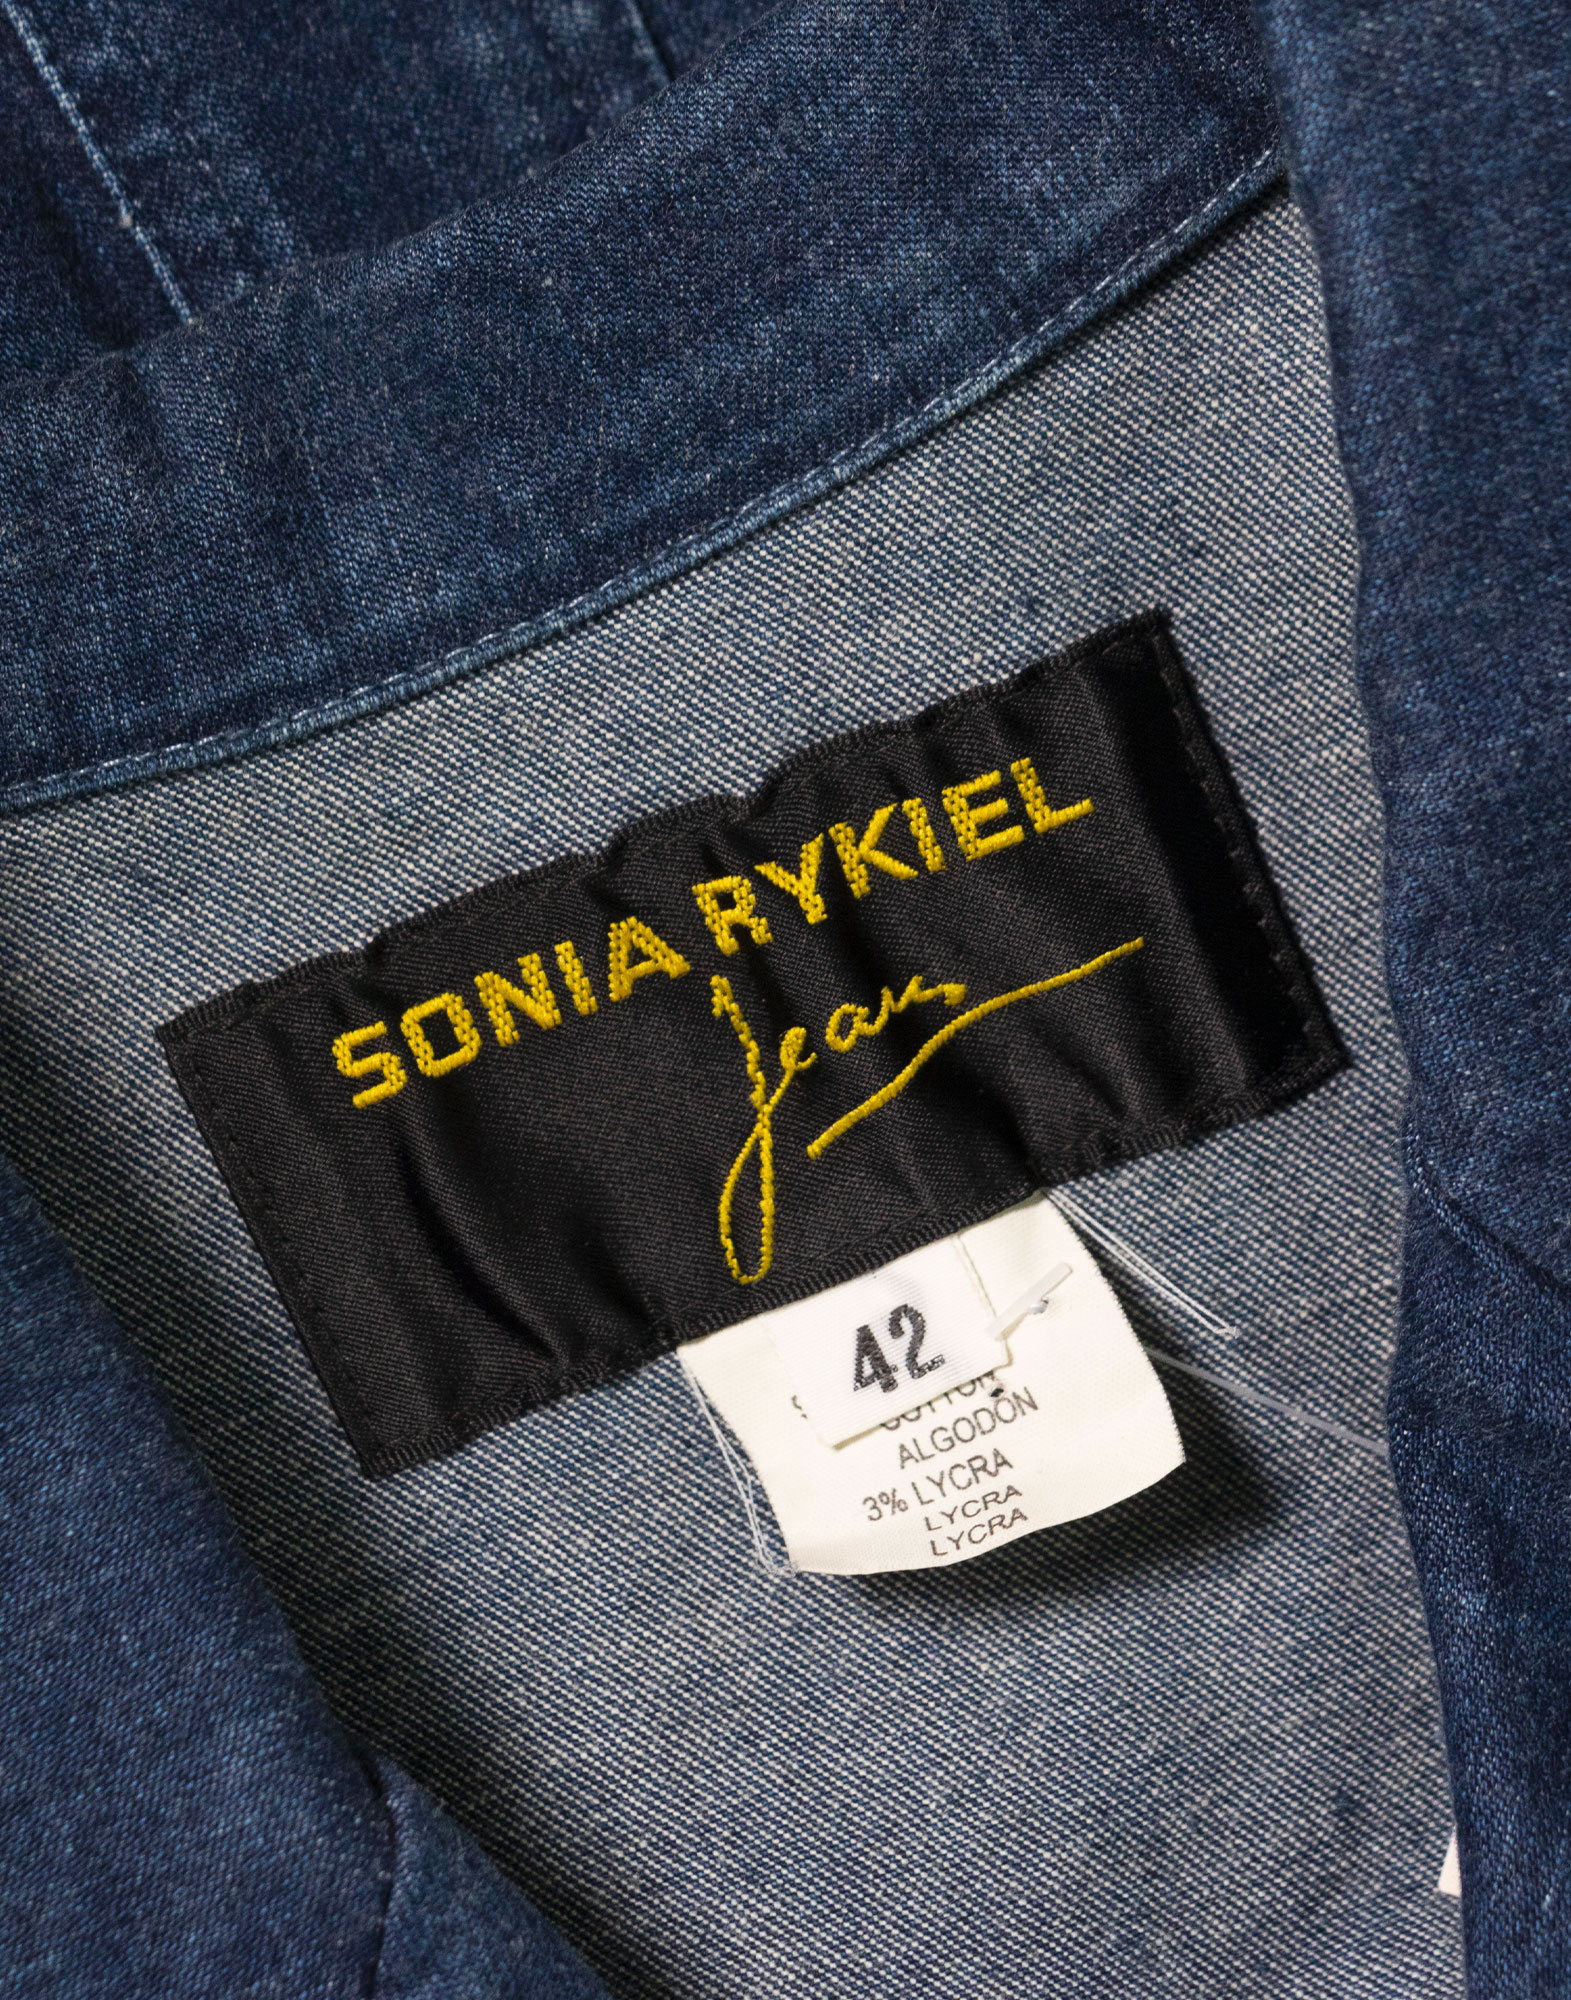 Sonia Rykiel - 90s Cotton jacket